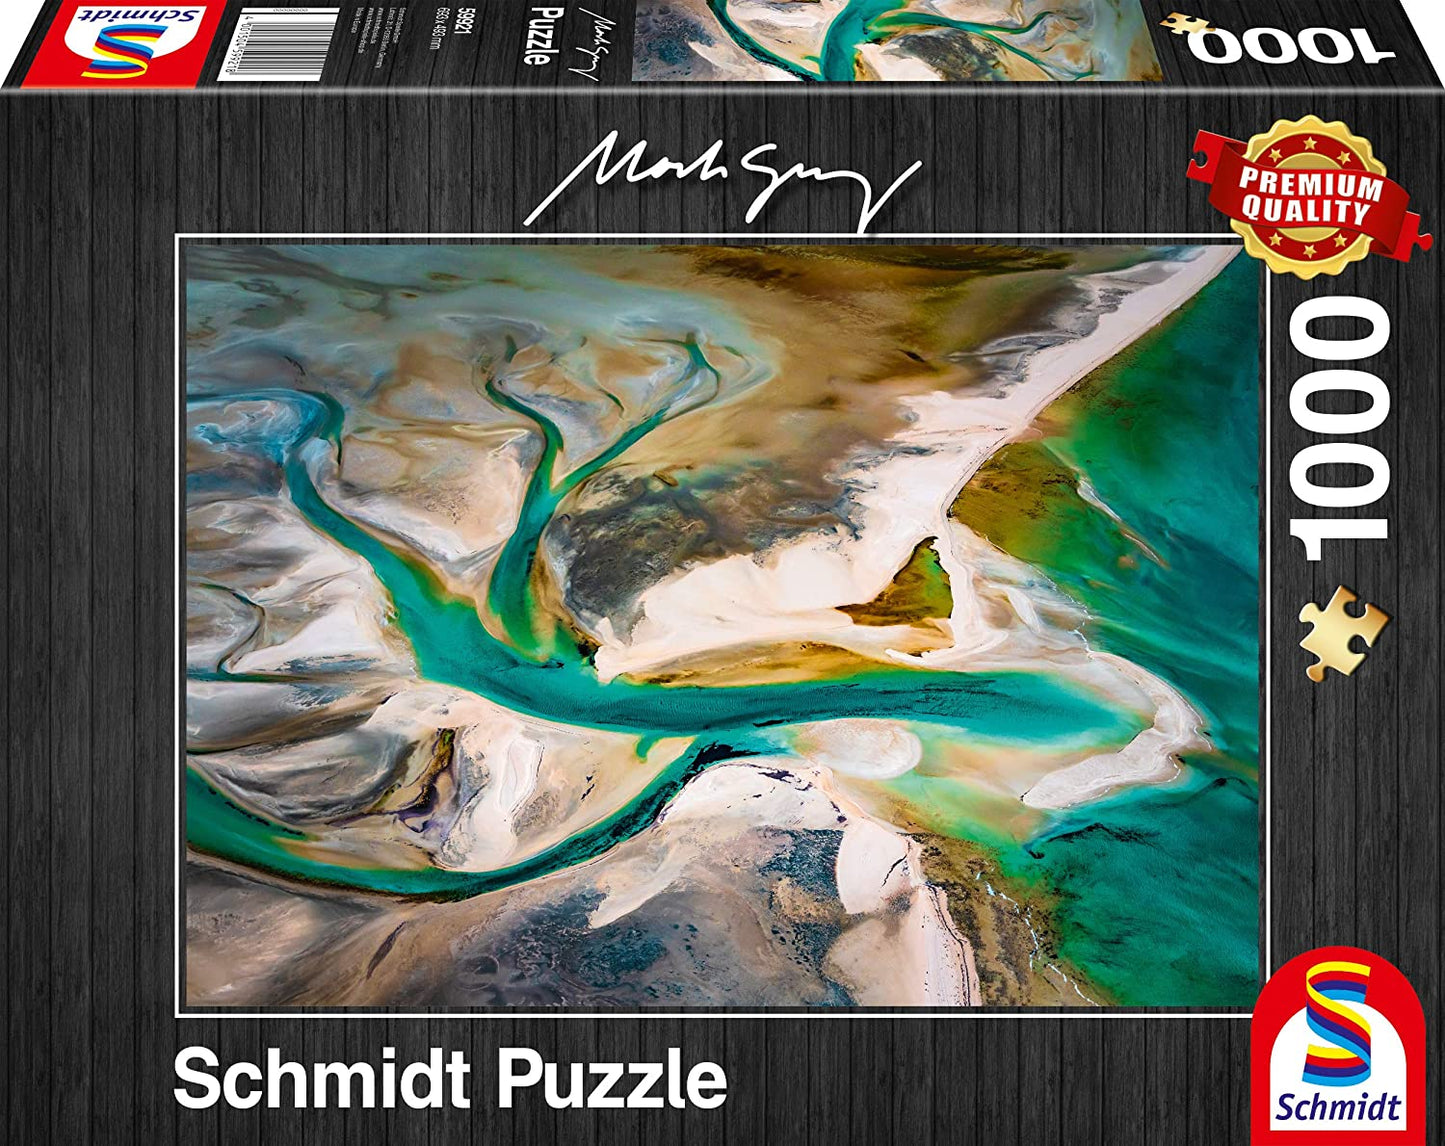 Schmidt - Mark Gray - Fusion - 1000 Piece Jigsaw Puzzle